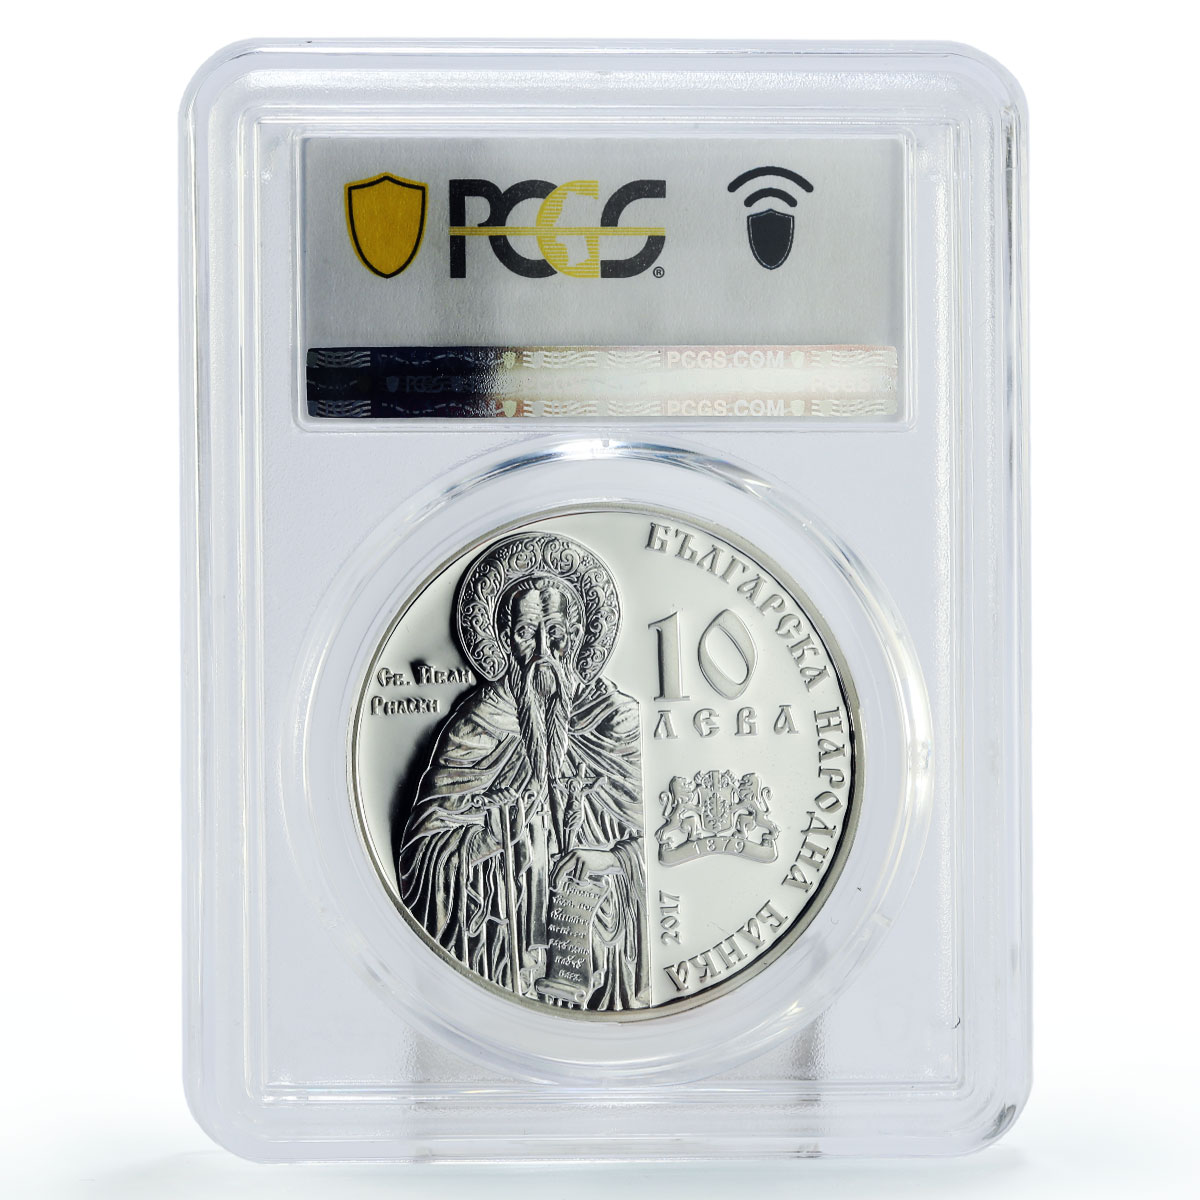 Bulgaria 10 leva Rila Monastery Church St John PR69 PCGS silver coin 2017